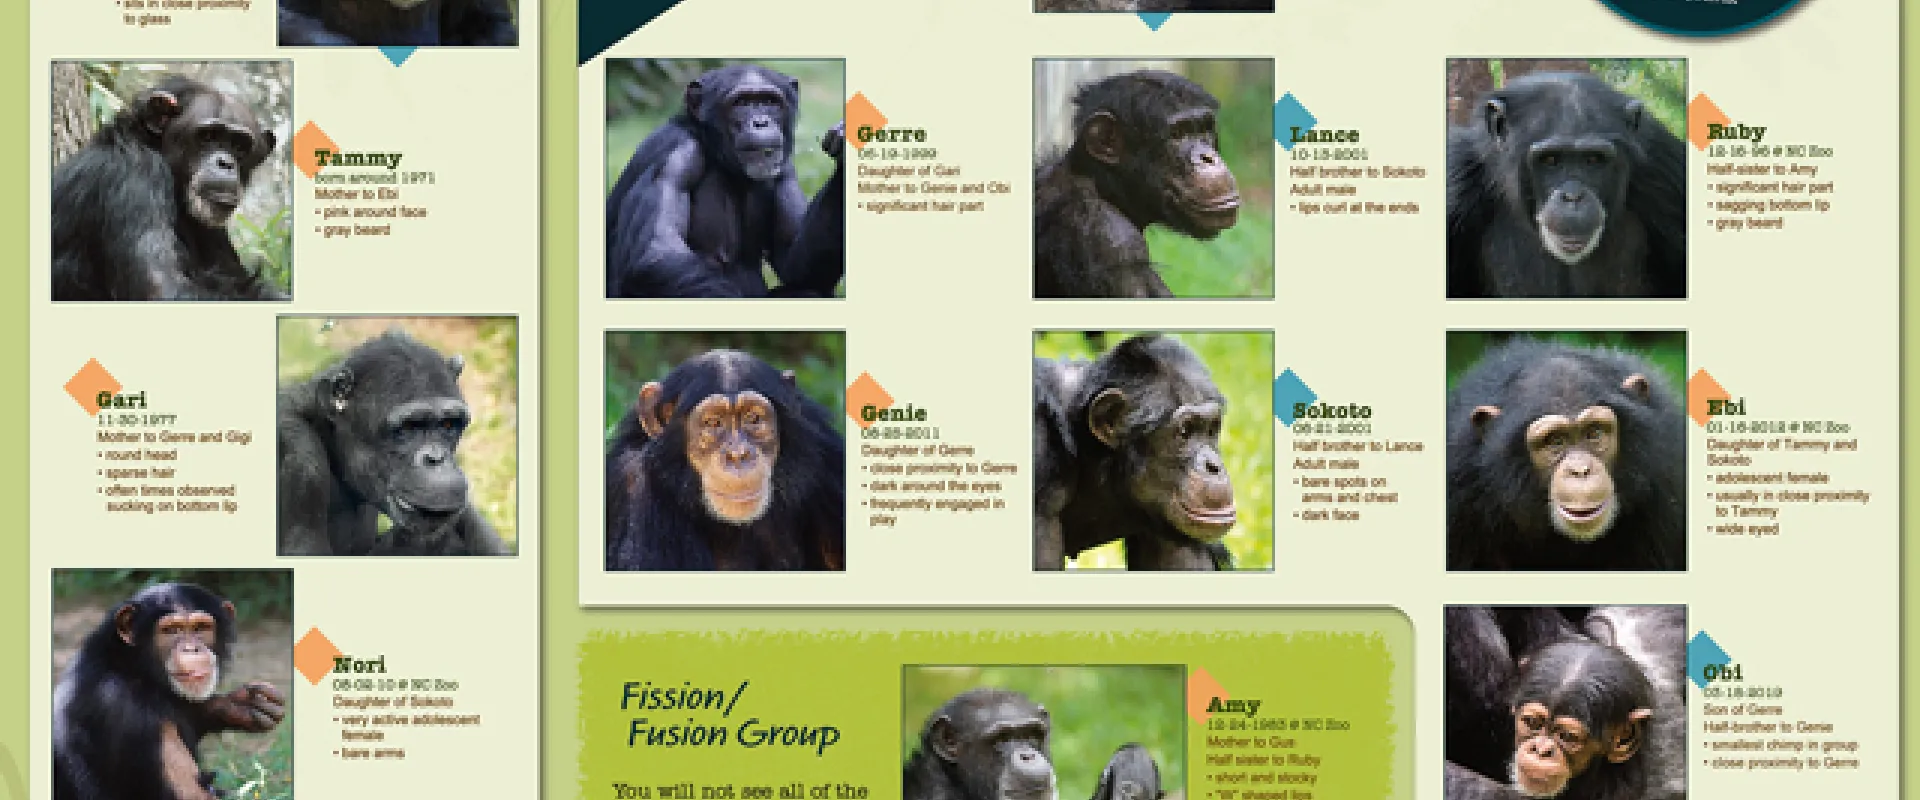 Chimpanzee Management